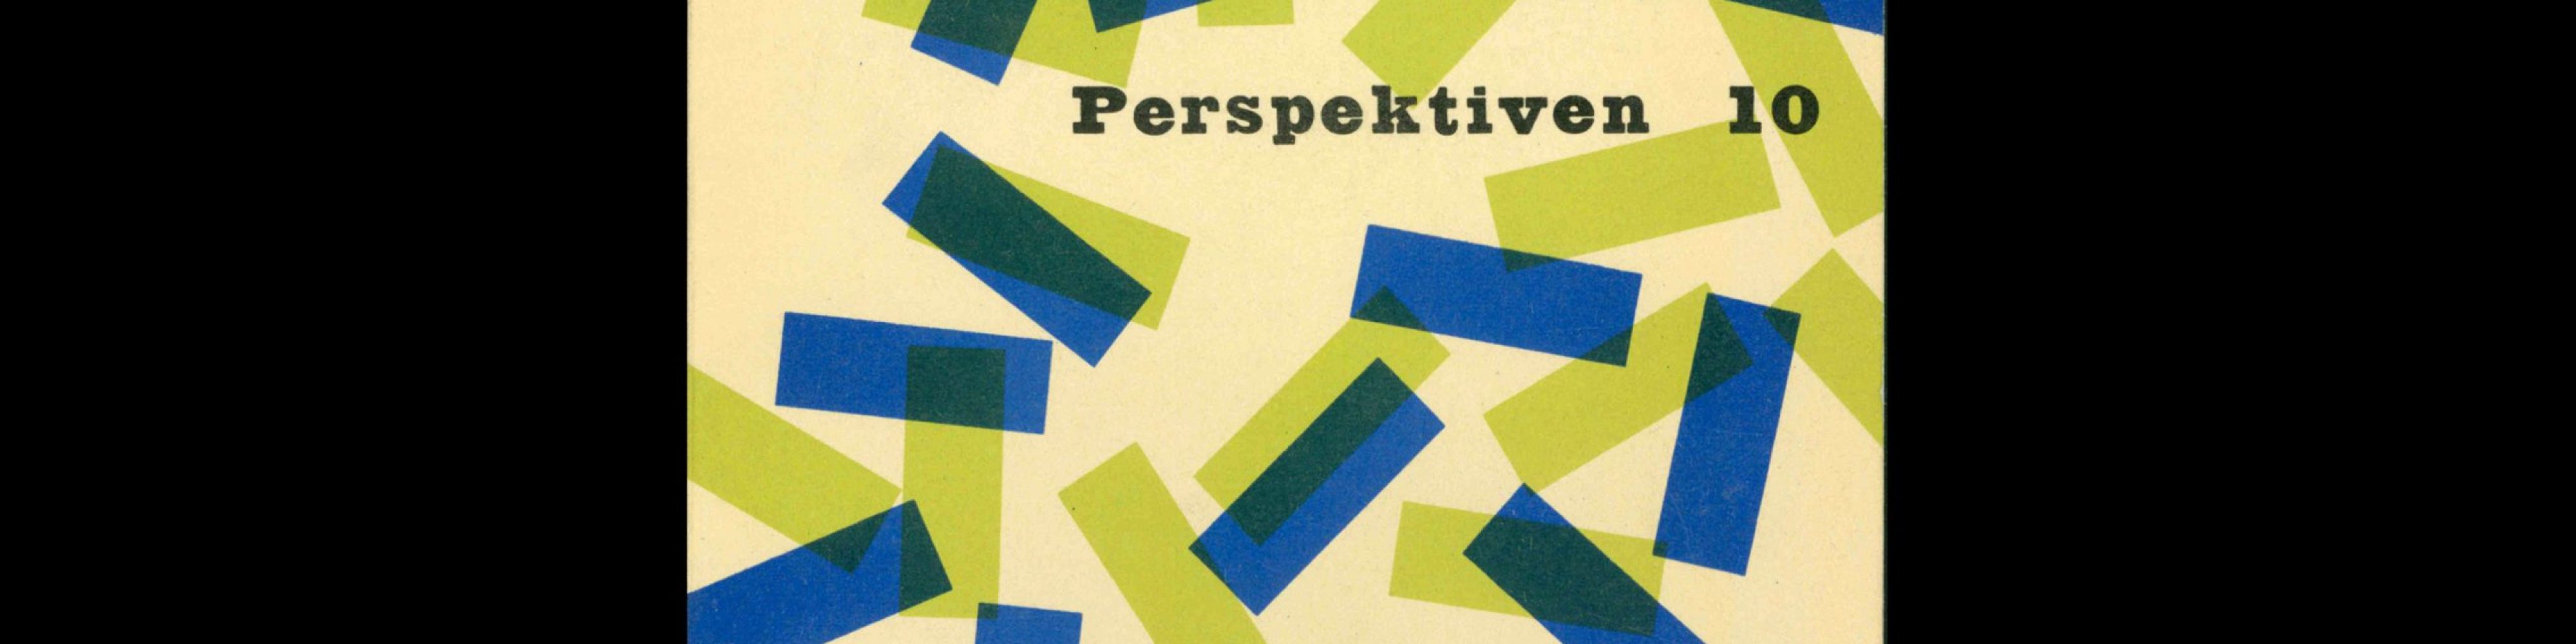 Perspektiven, Literatur, Kunst, Musik, 10, 1955. Cover design by Jerome Kuhl